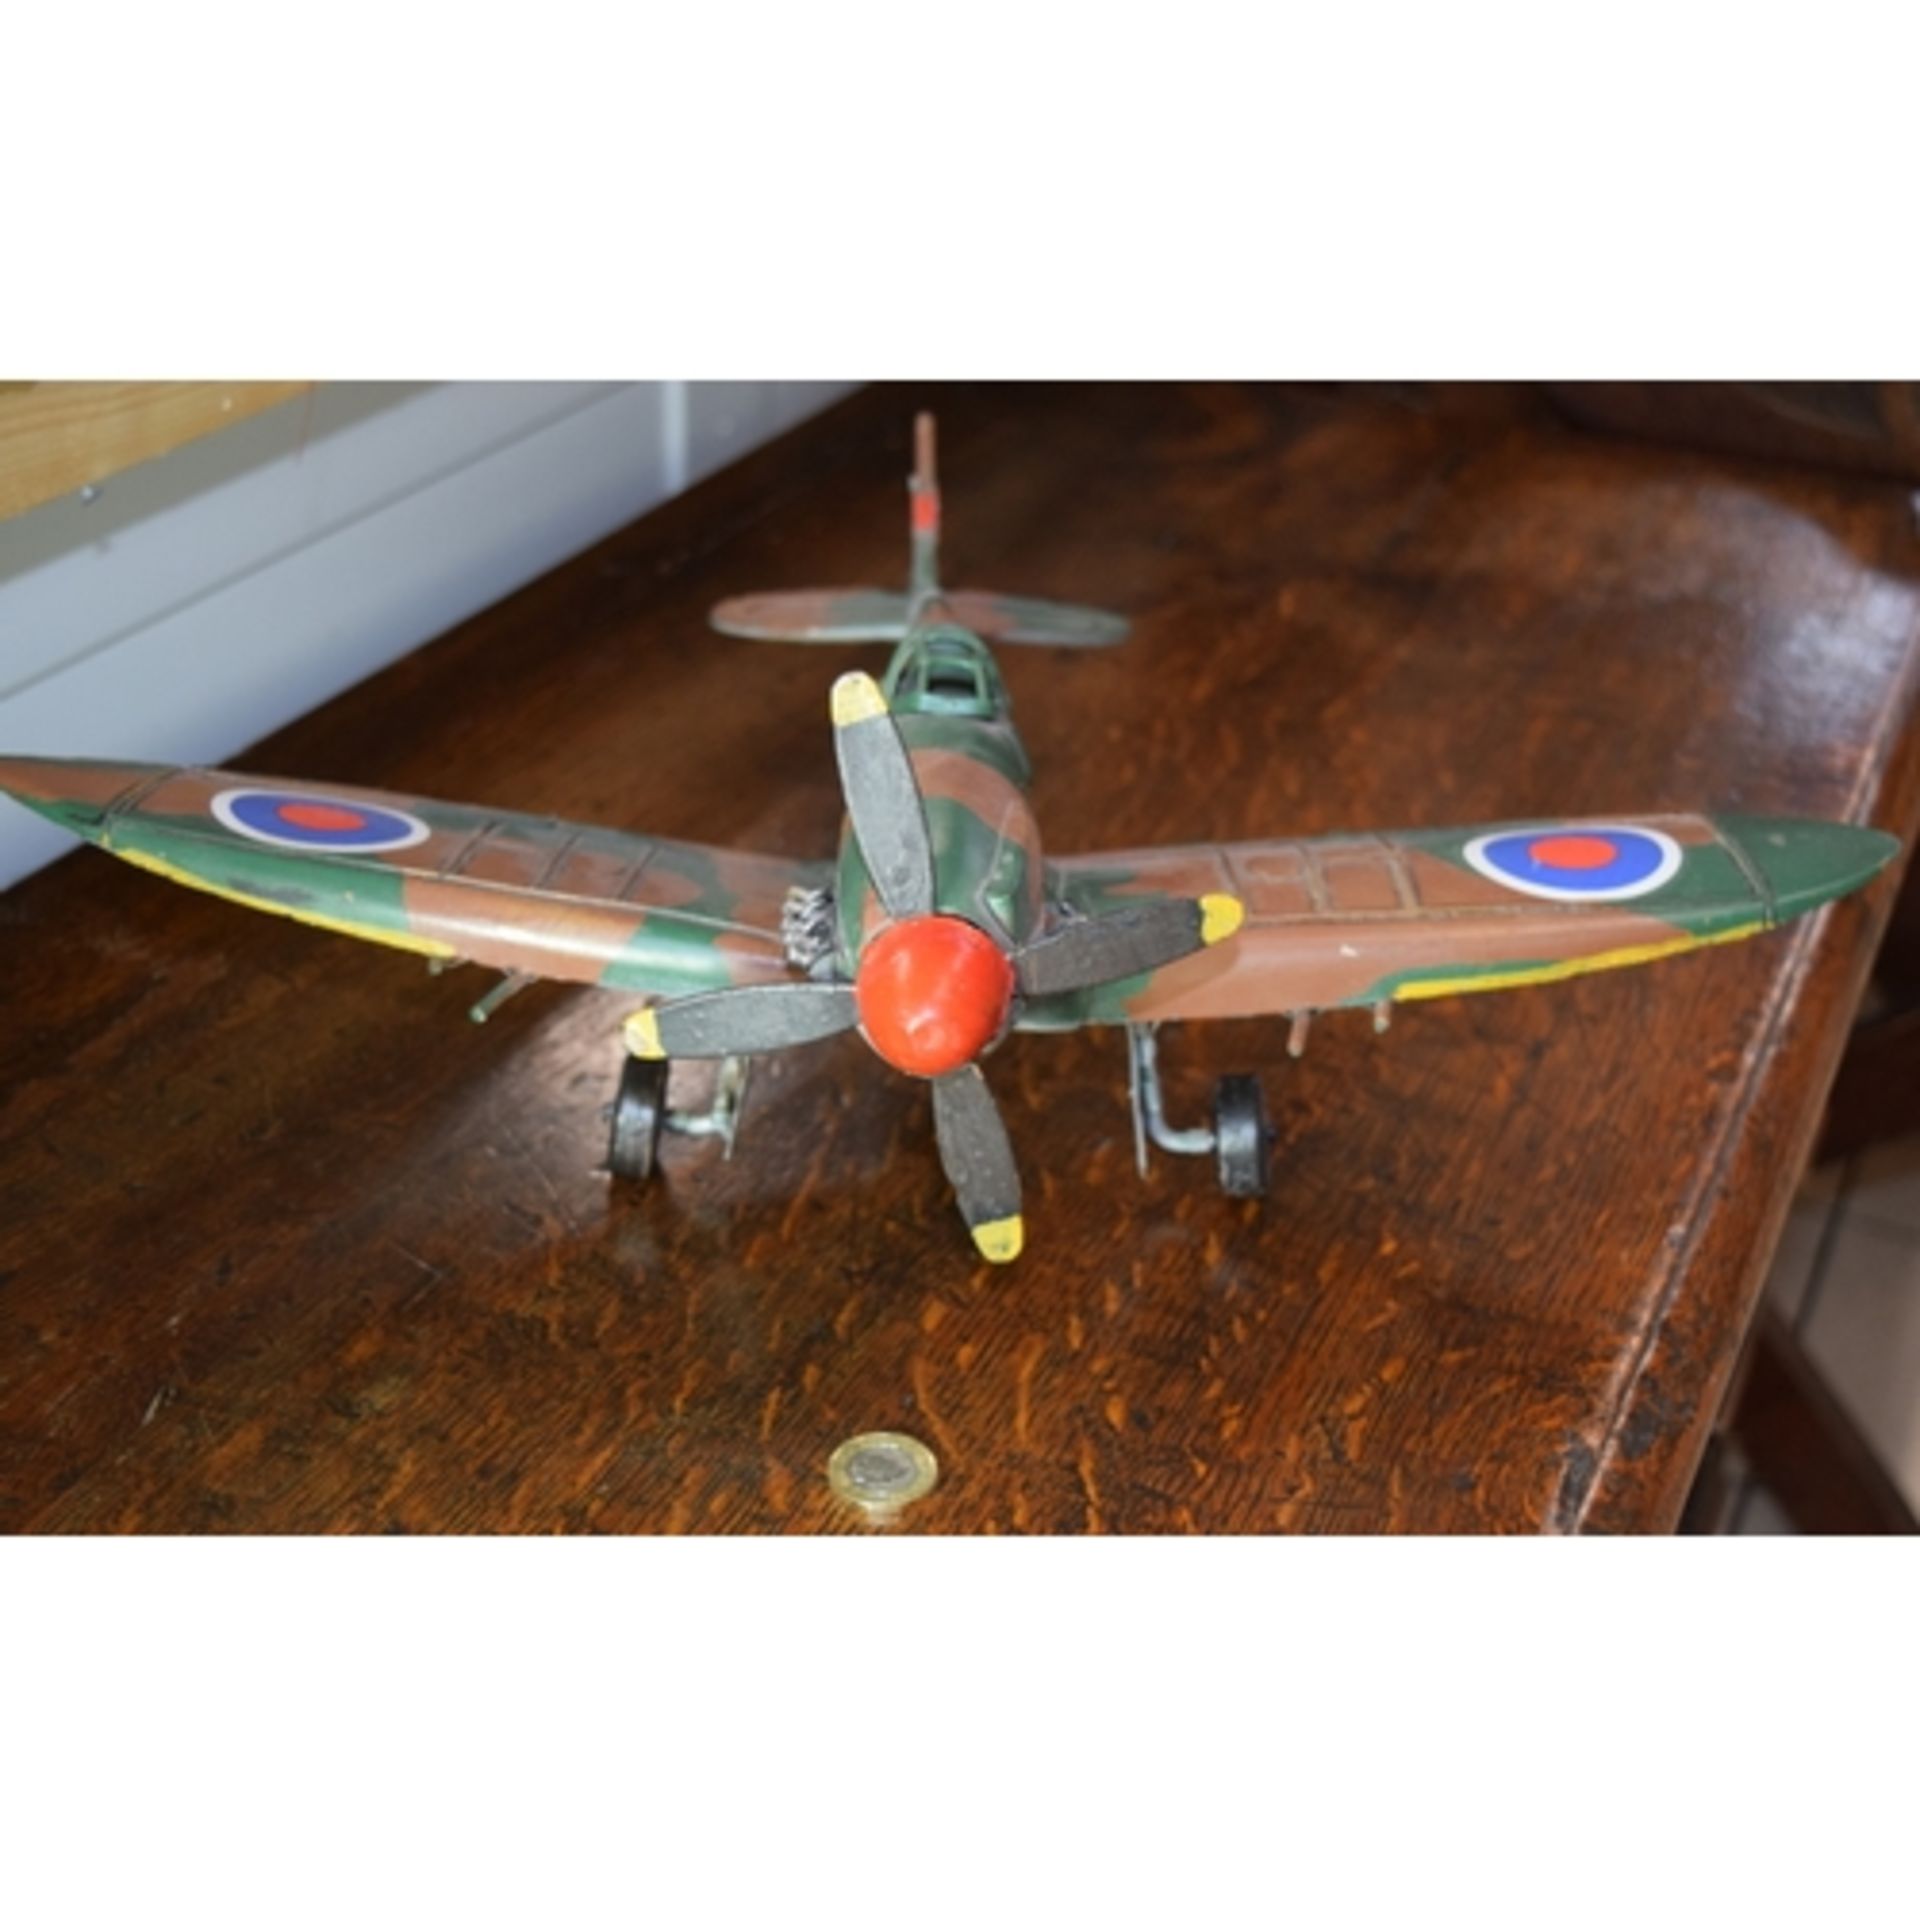 Tinplate Model Spitfire - Image 2 of 2